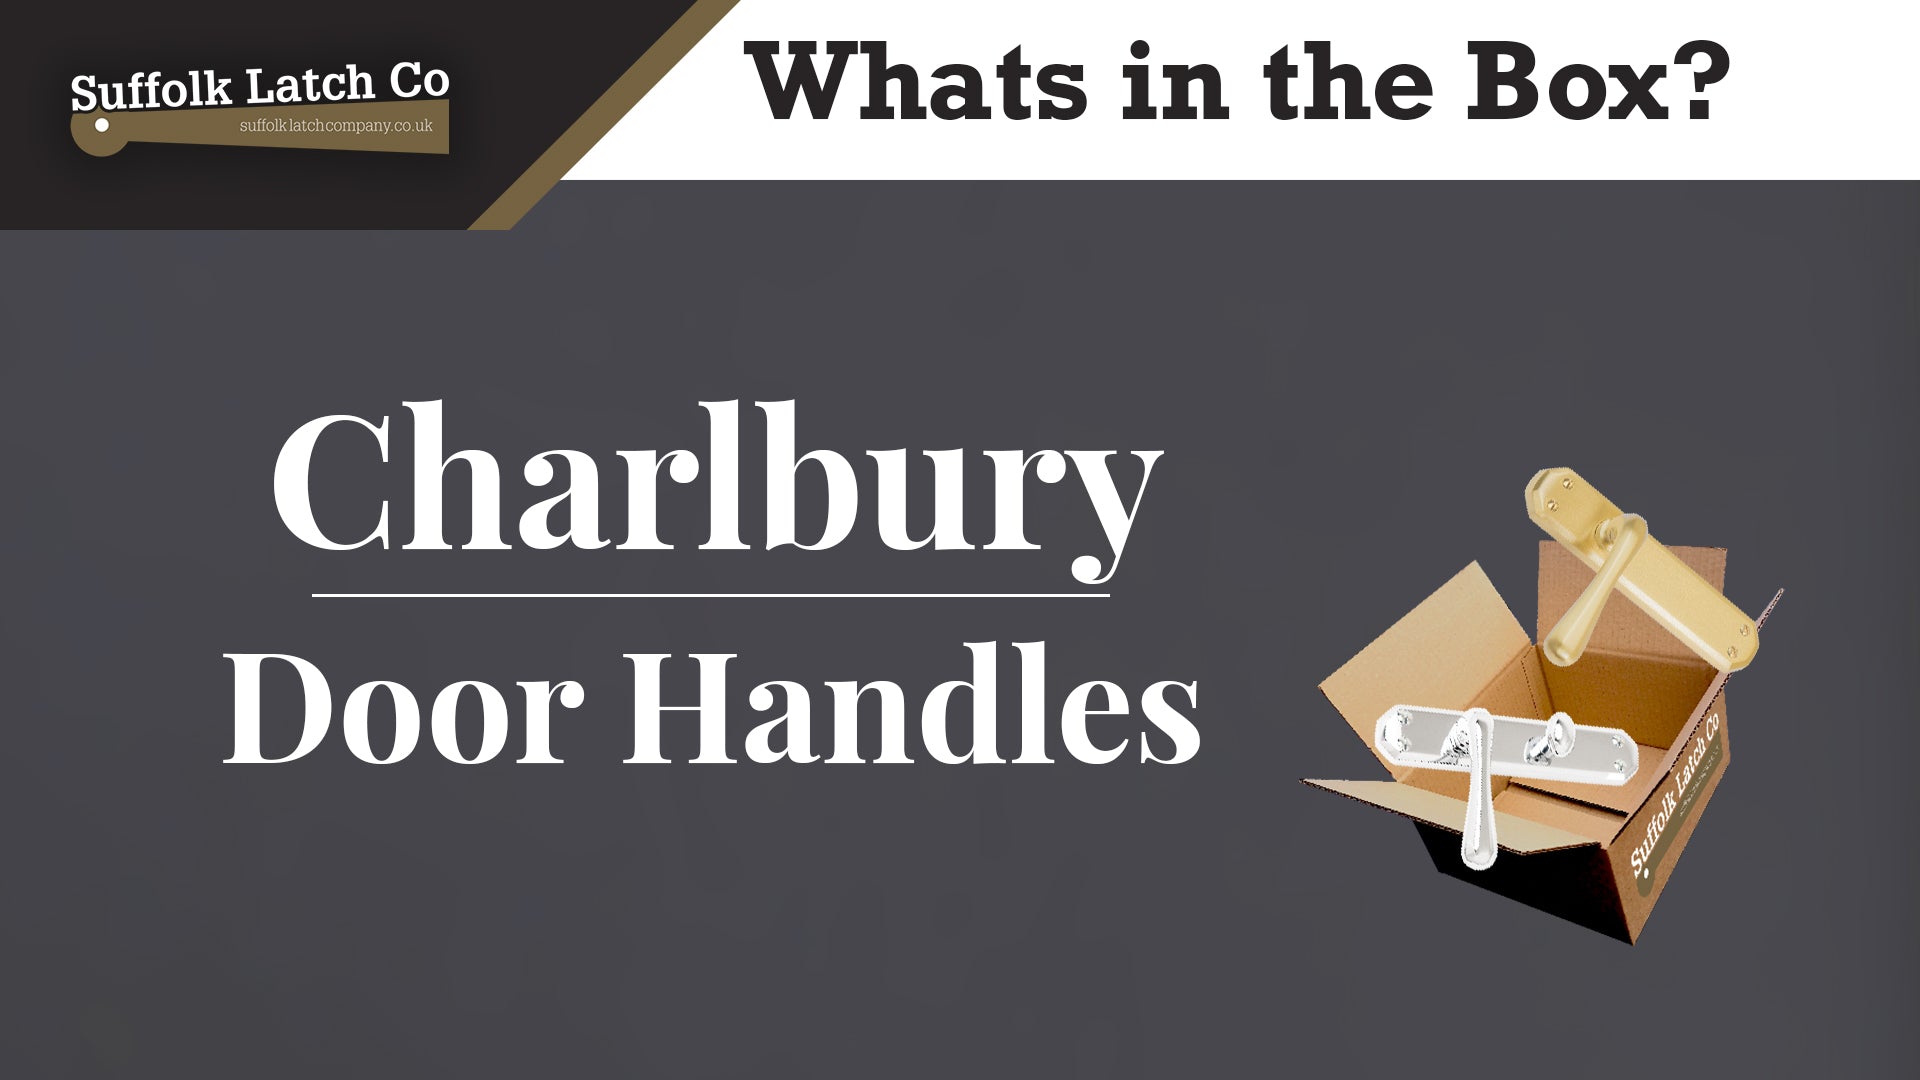 What's in the box: Charlbury Door Handles